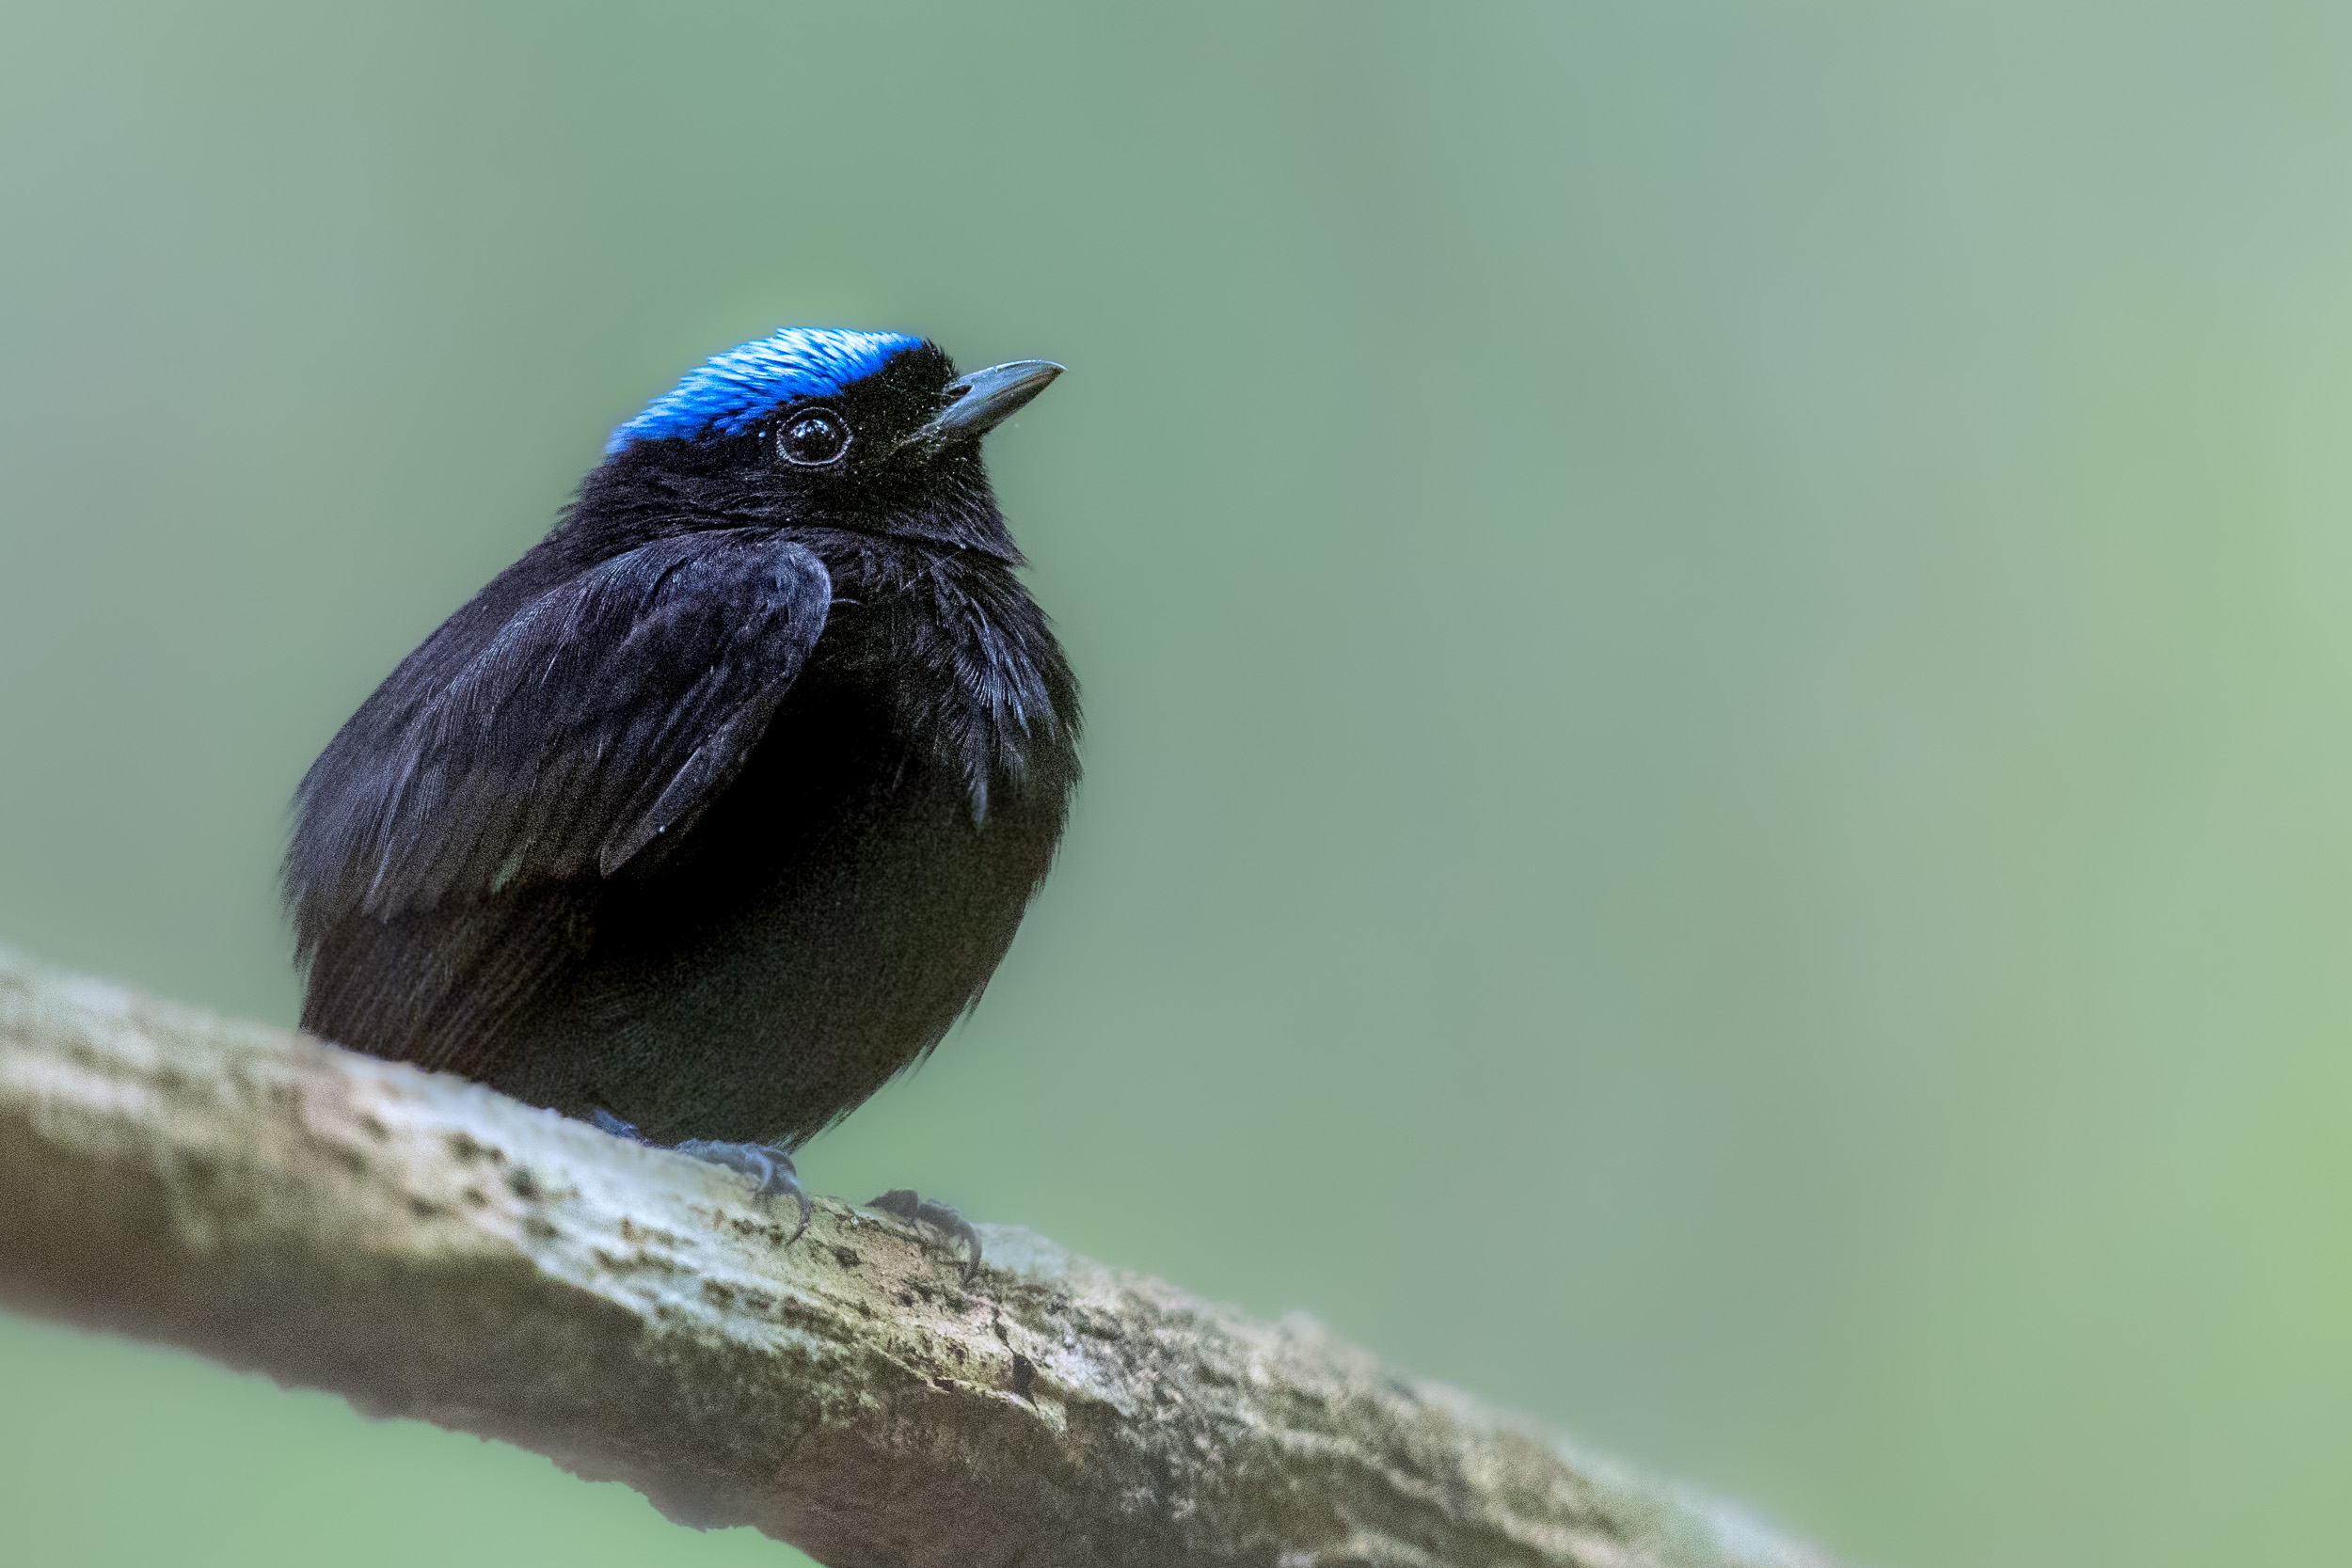 Destination Panama birdwatching tours with Birding Experience